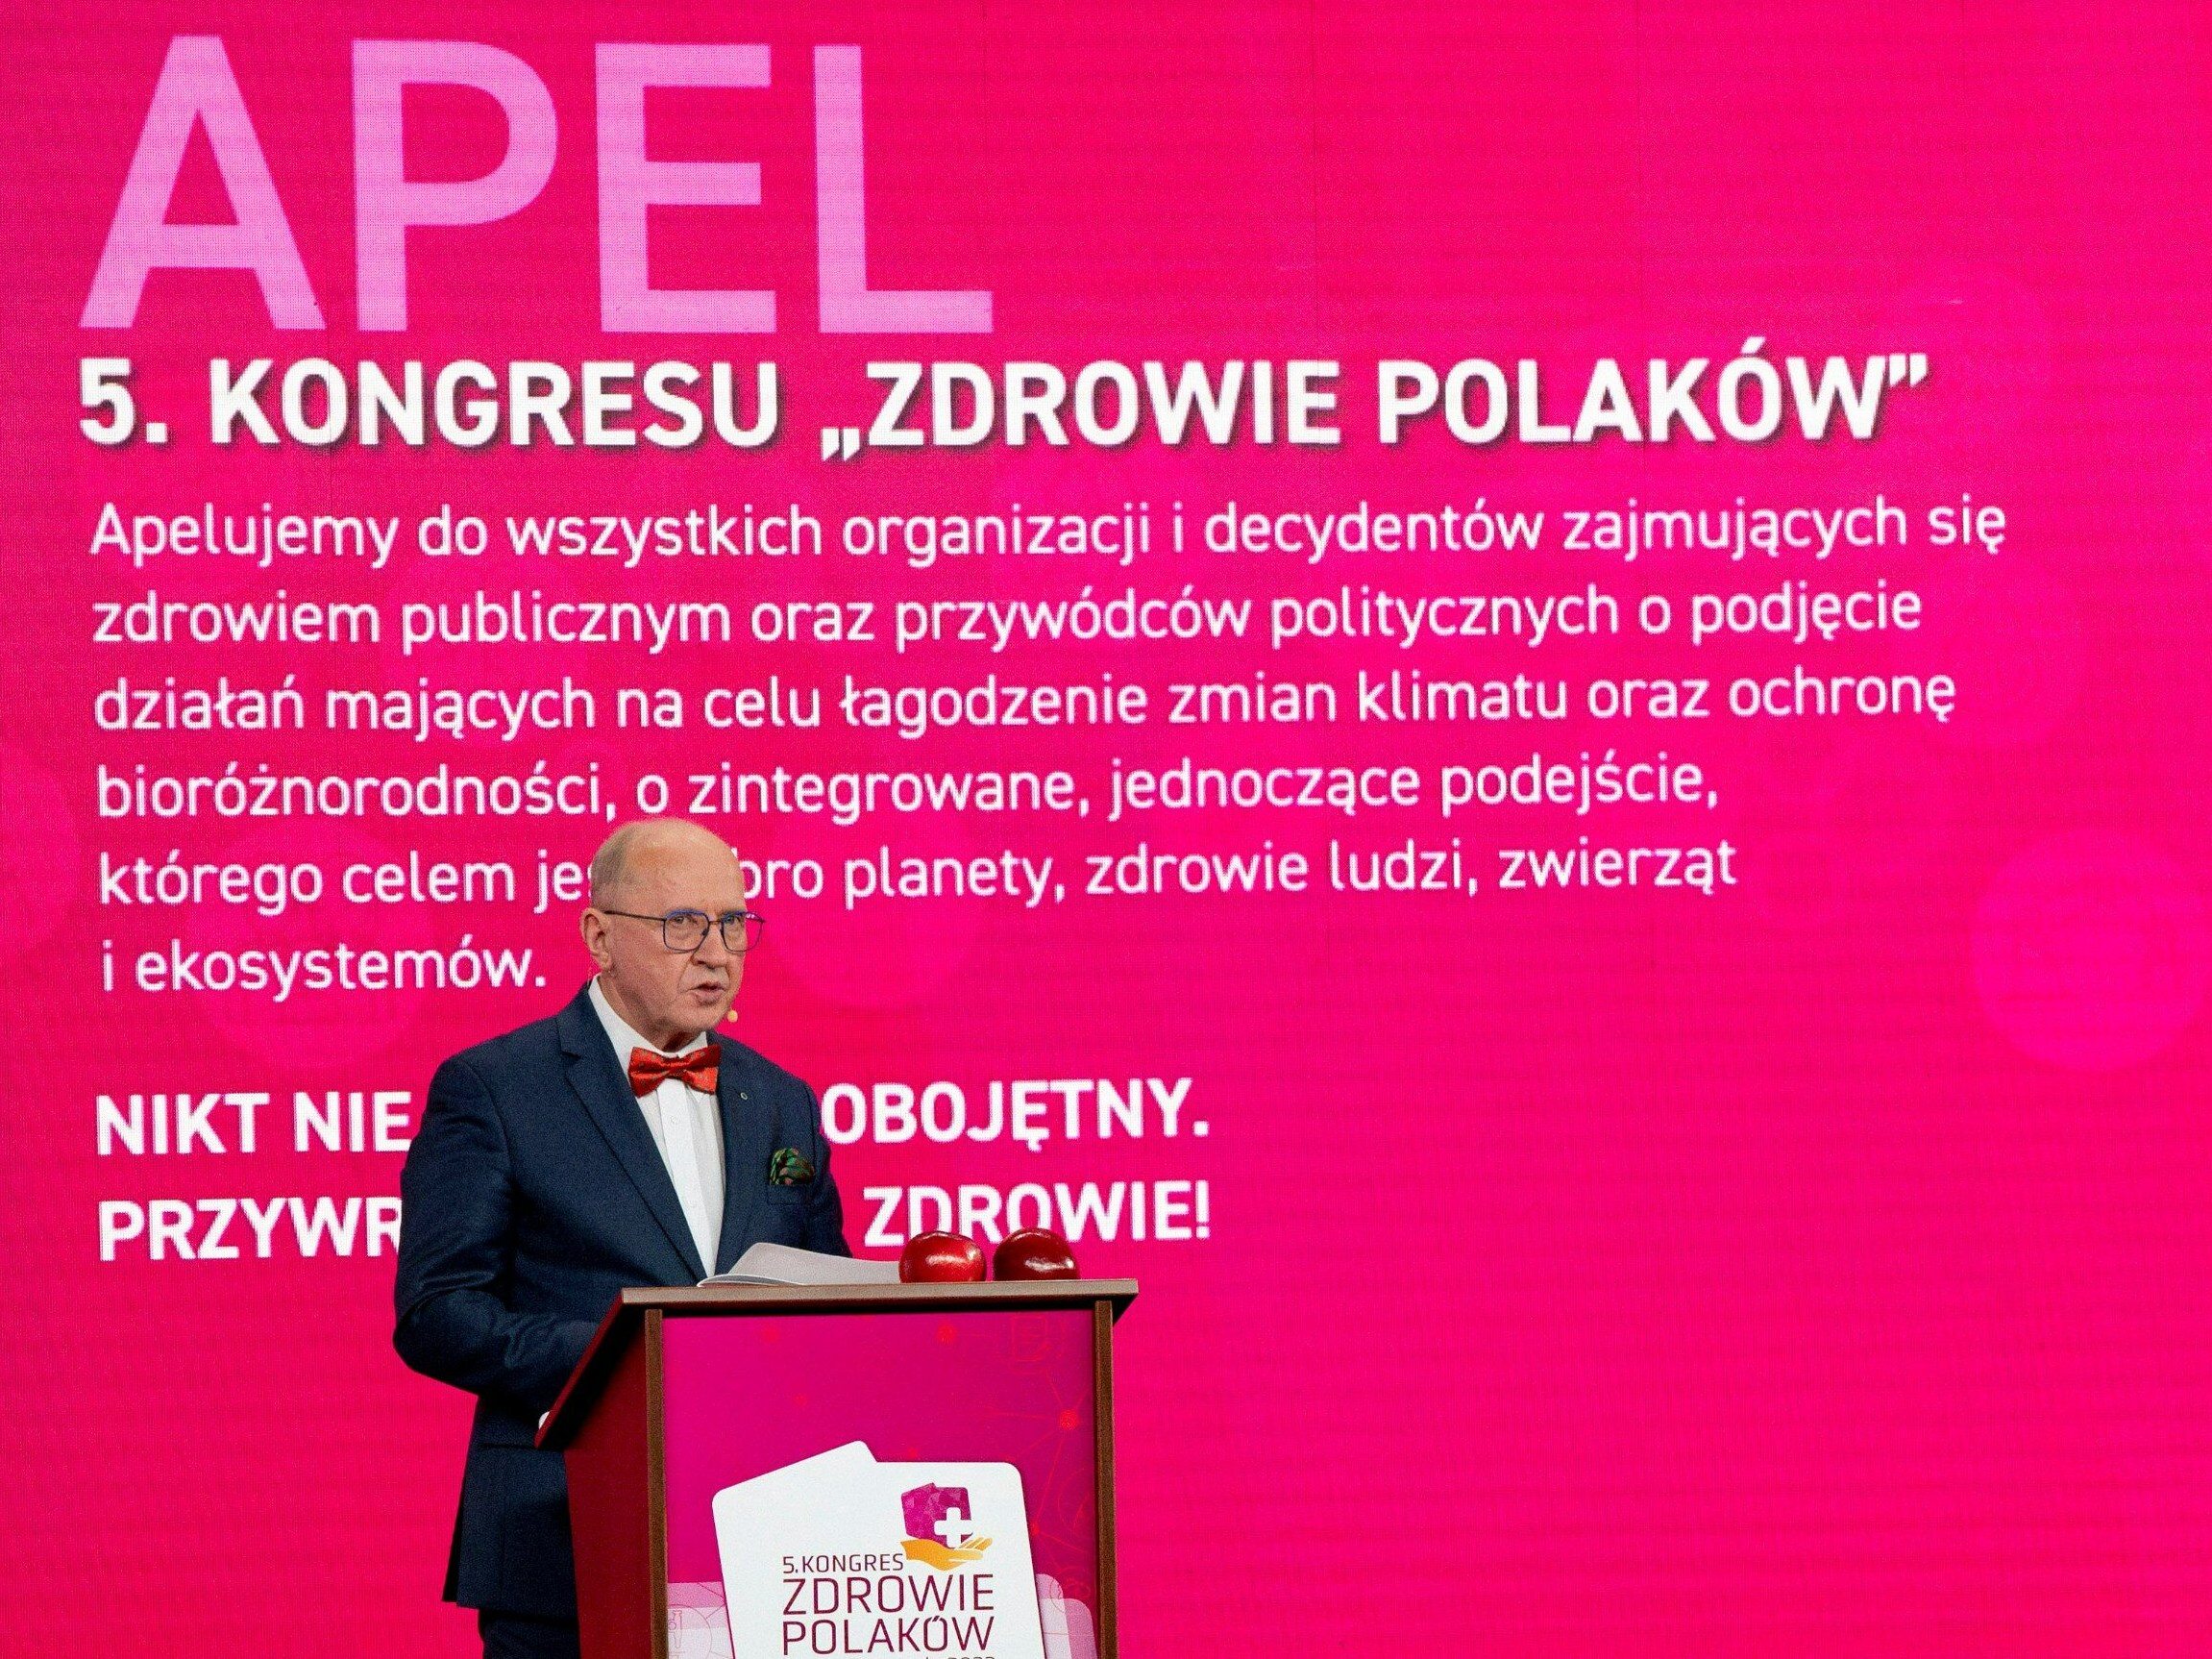 "One Health", i.e. the Congress on the health of Poles